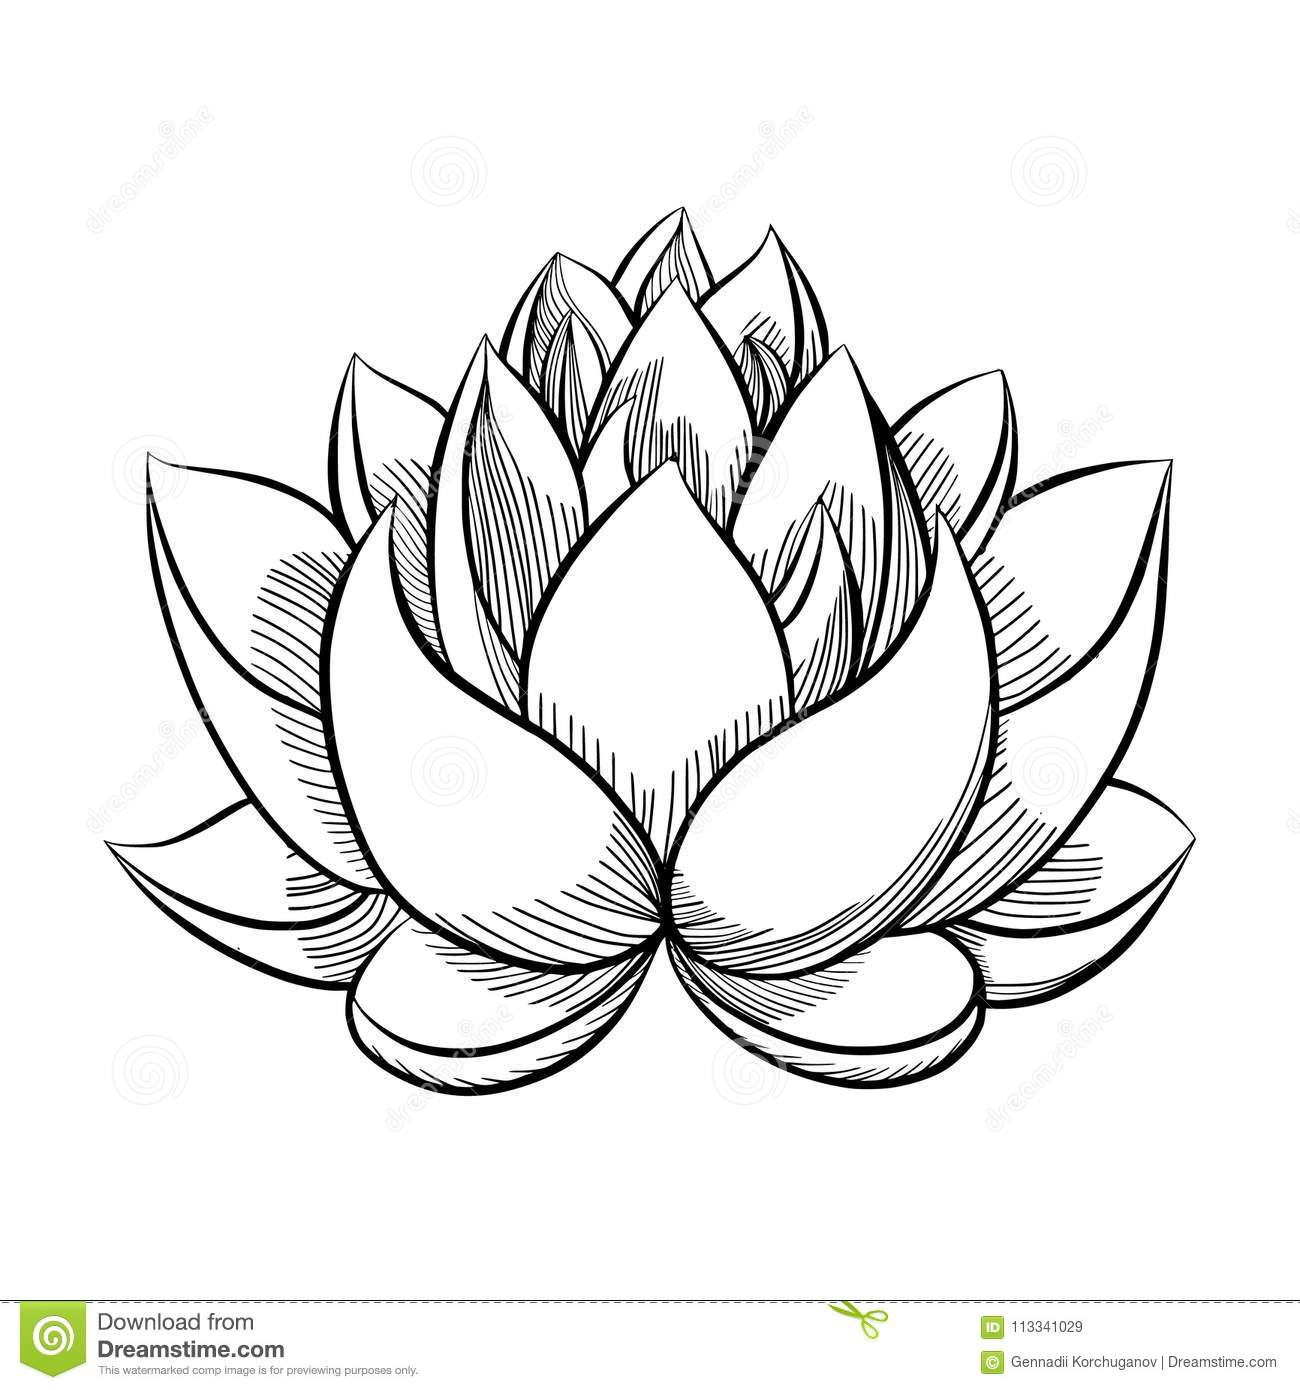 Imprimer Dessin De Fleur De Lotus Dessin - Businesssms pour Dessin Fleur De Lotus A Imprimer